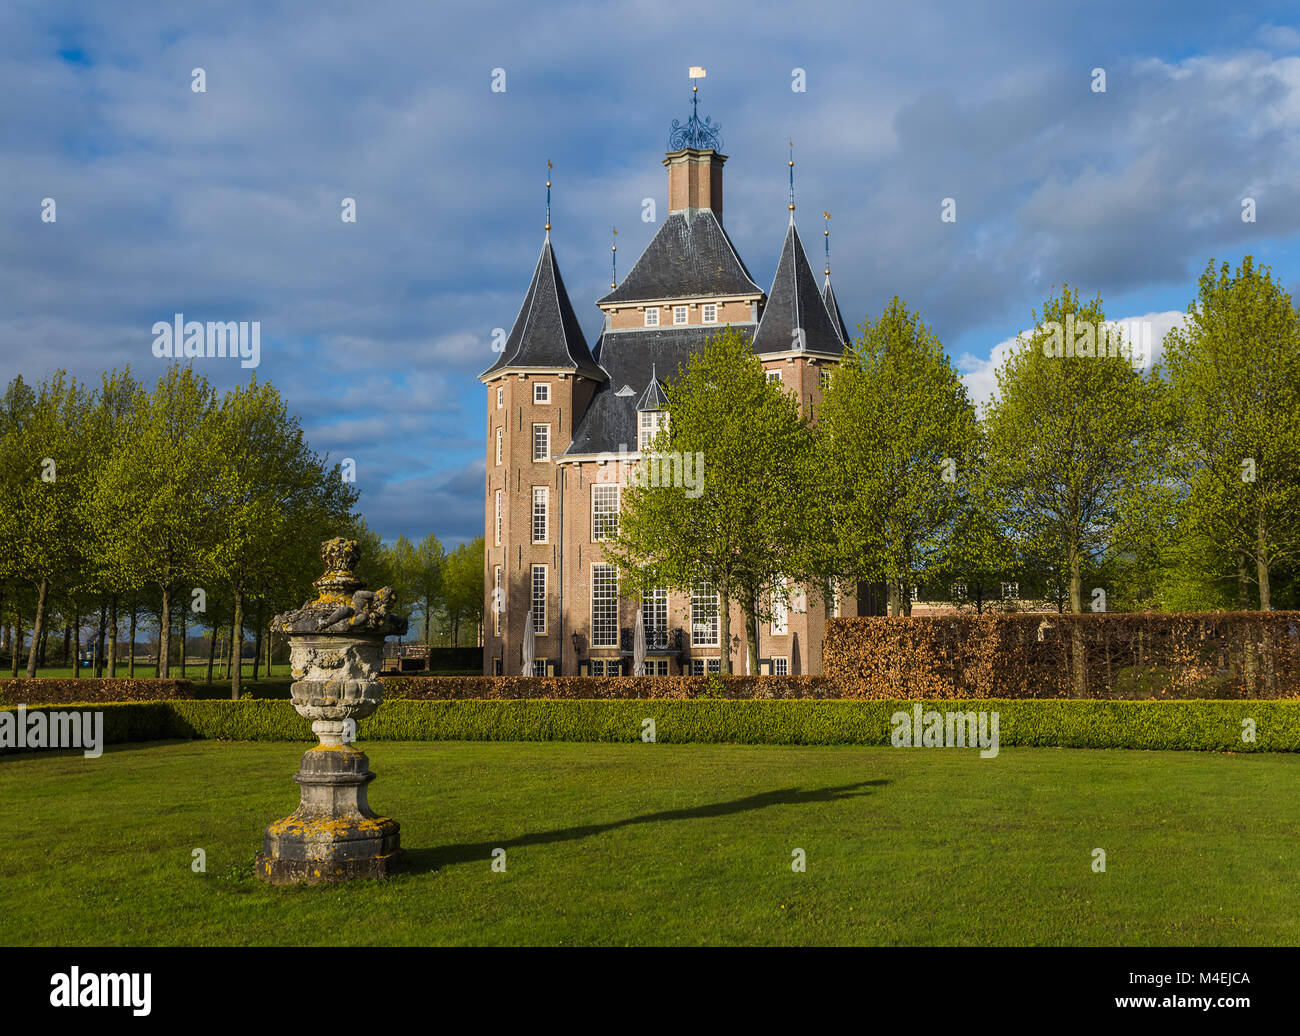 Castle Heemstede in Stock Photo - Alamy